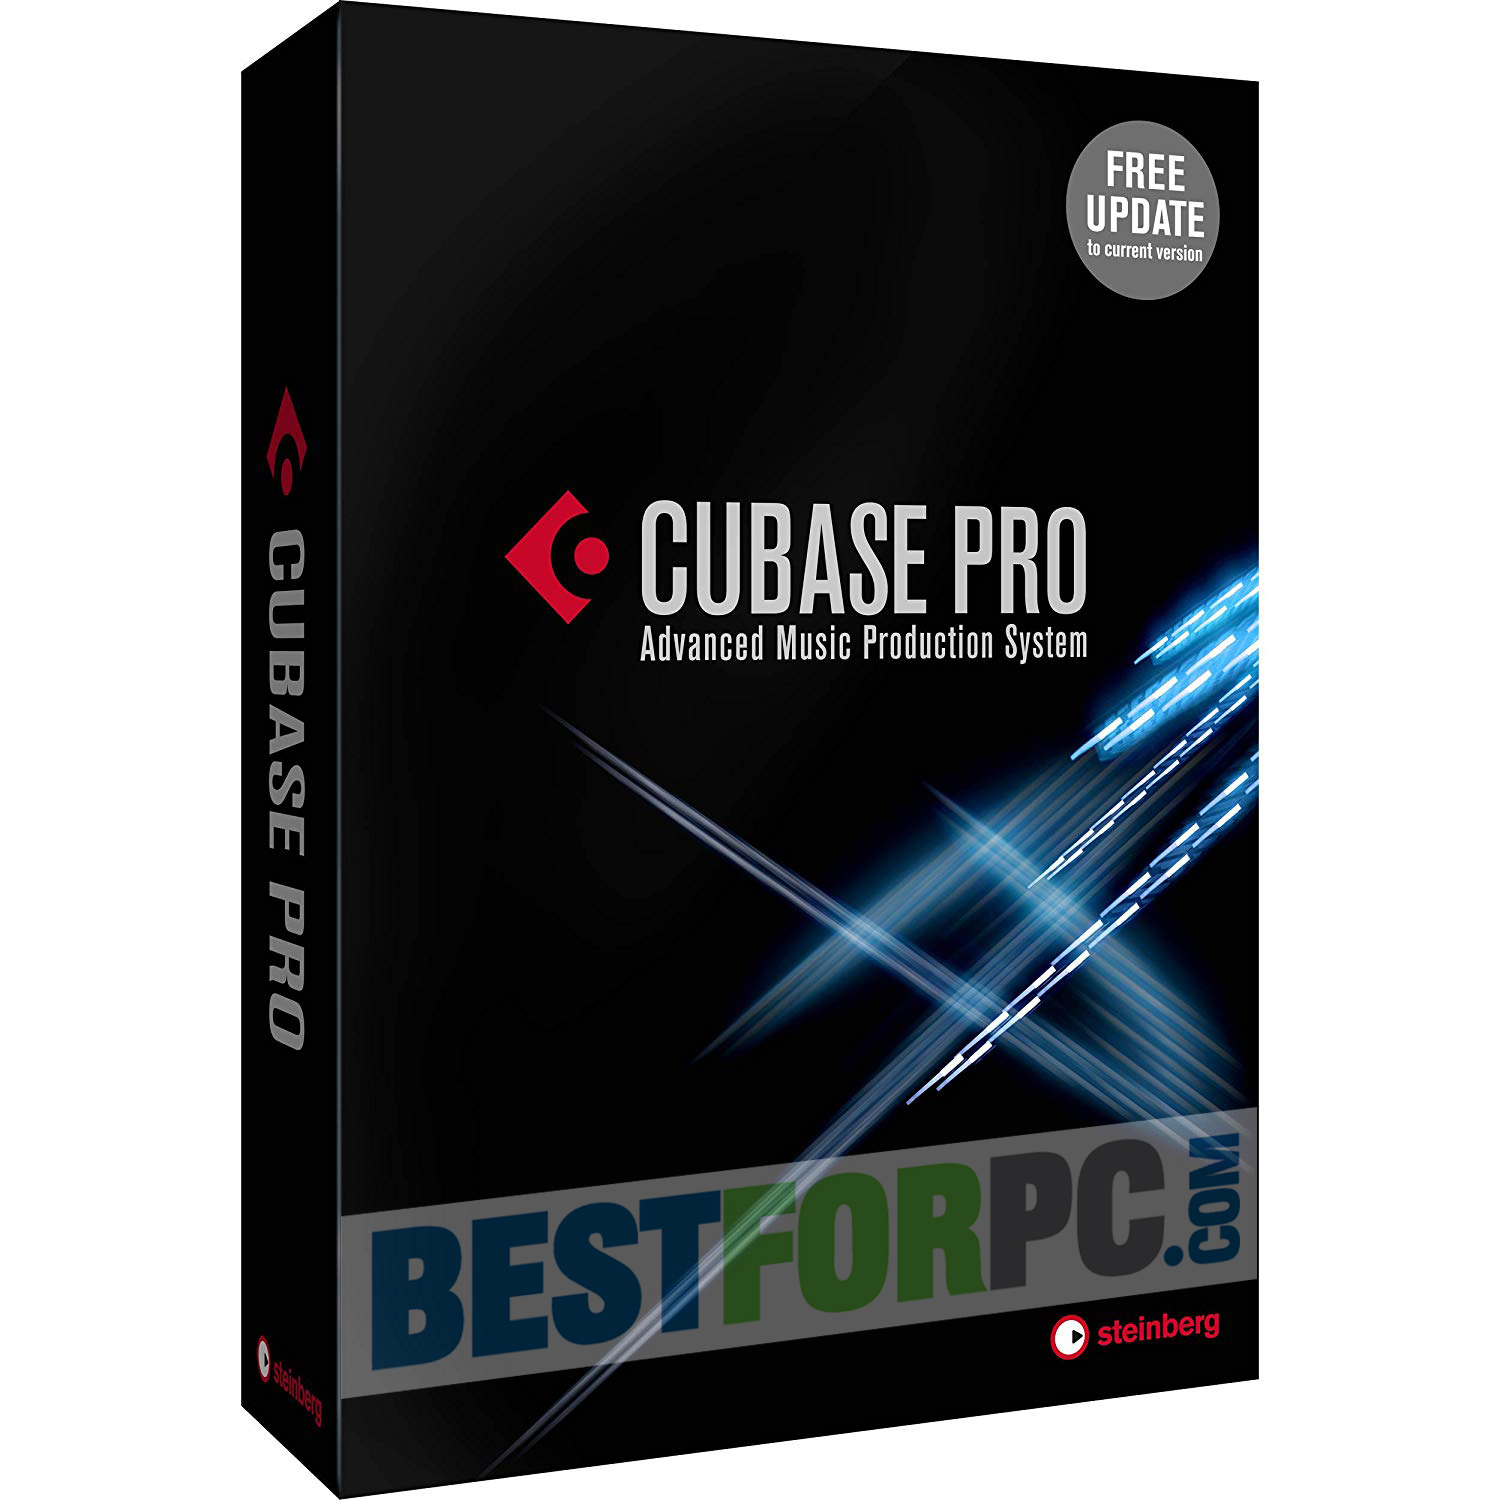 cubase 6 download full version free